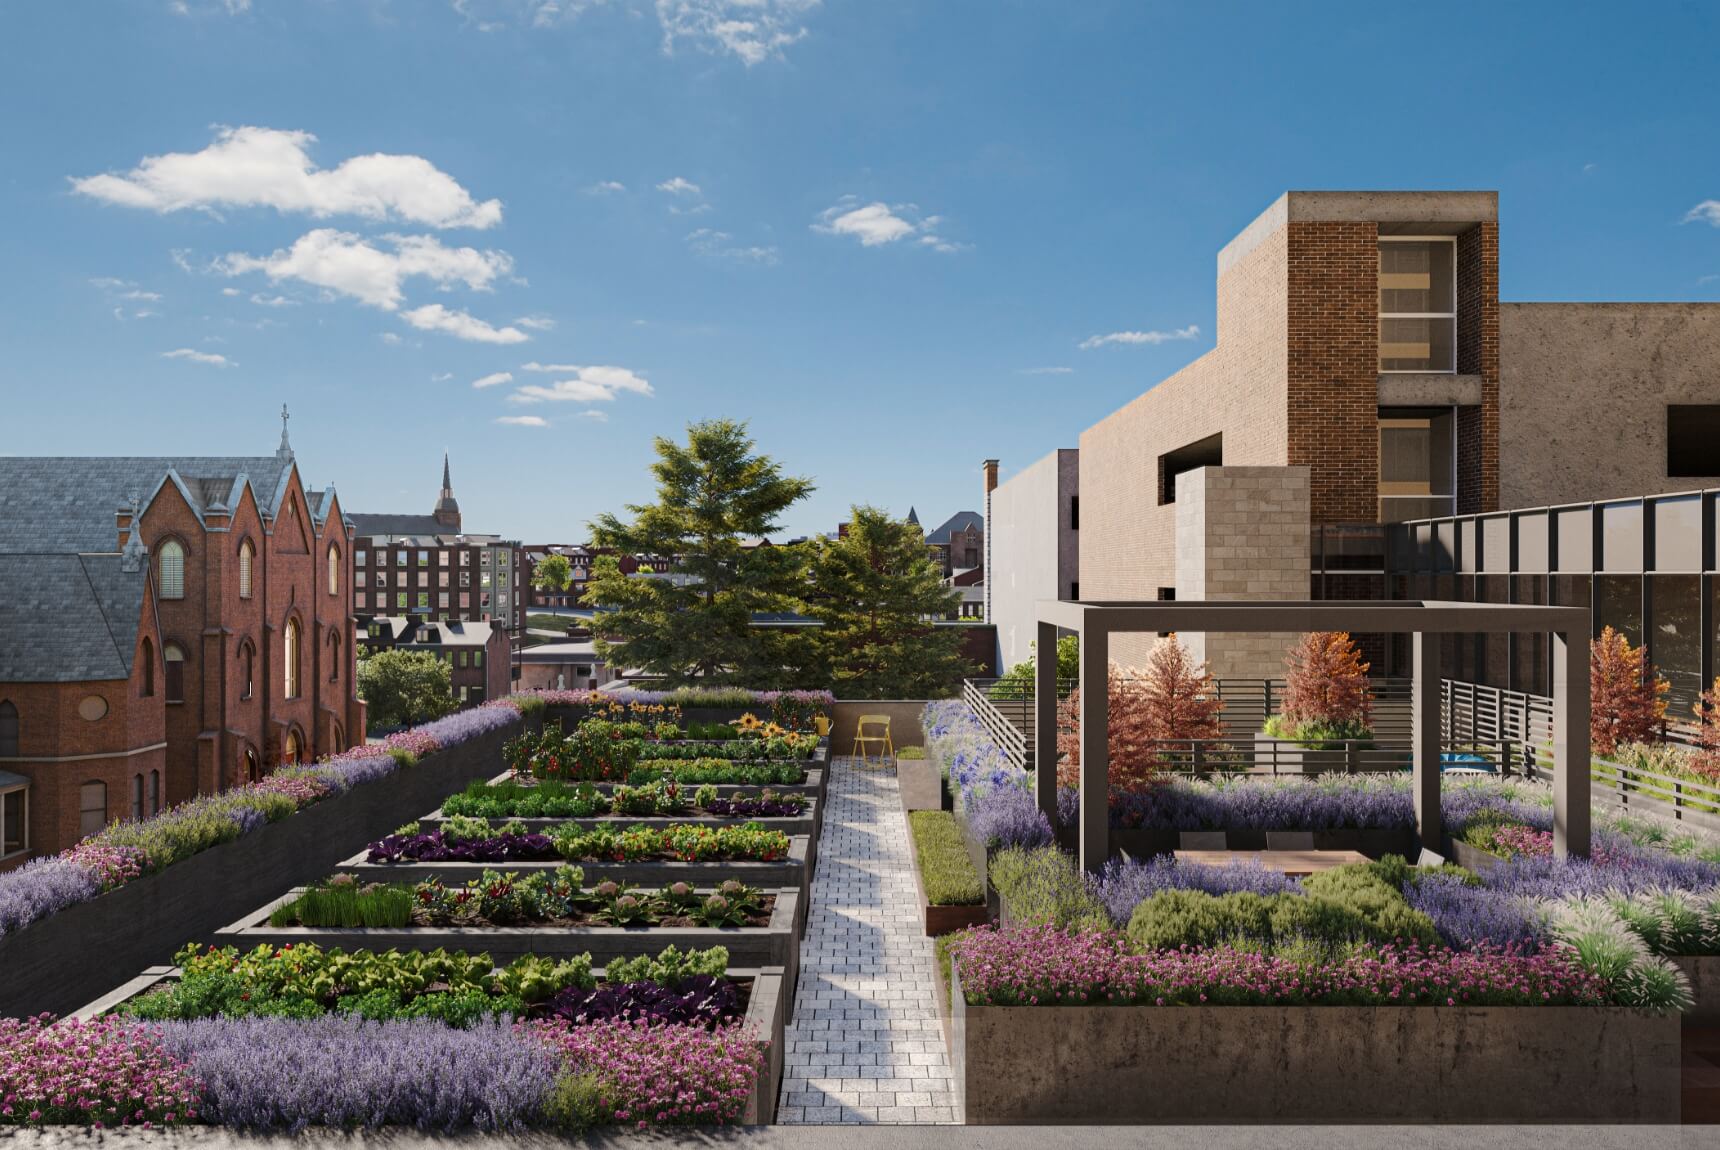 An artist's rendering of a rooftop garden for senior living.